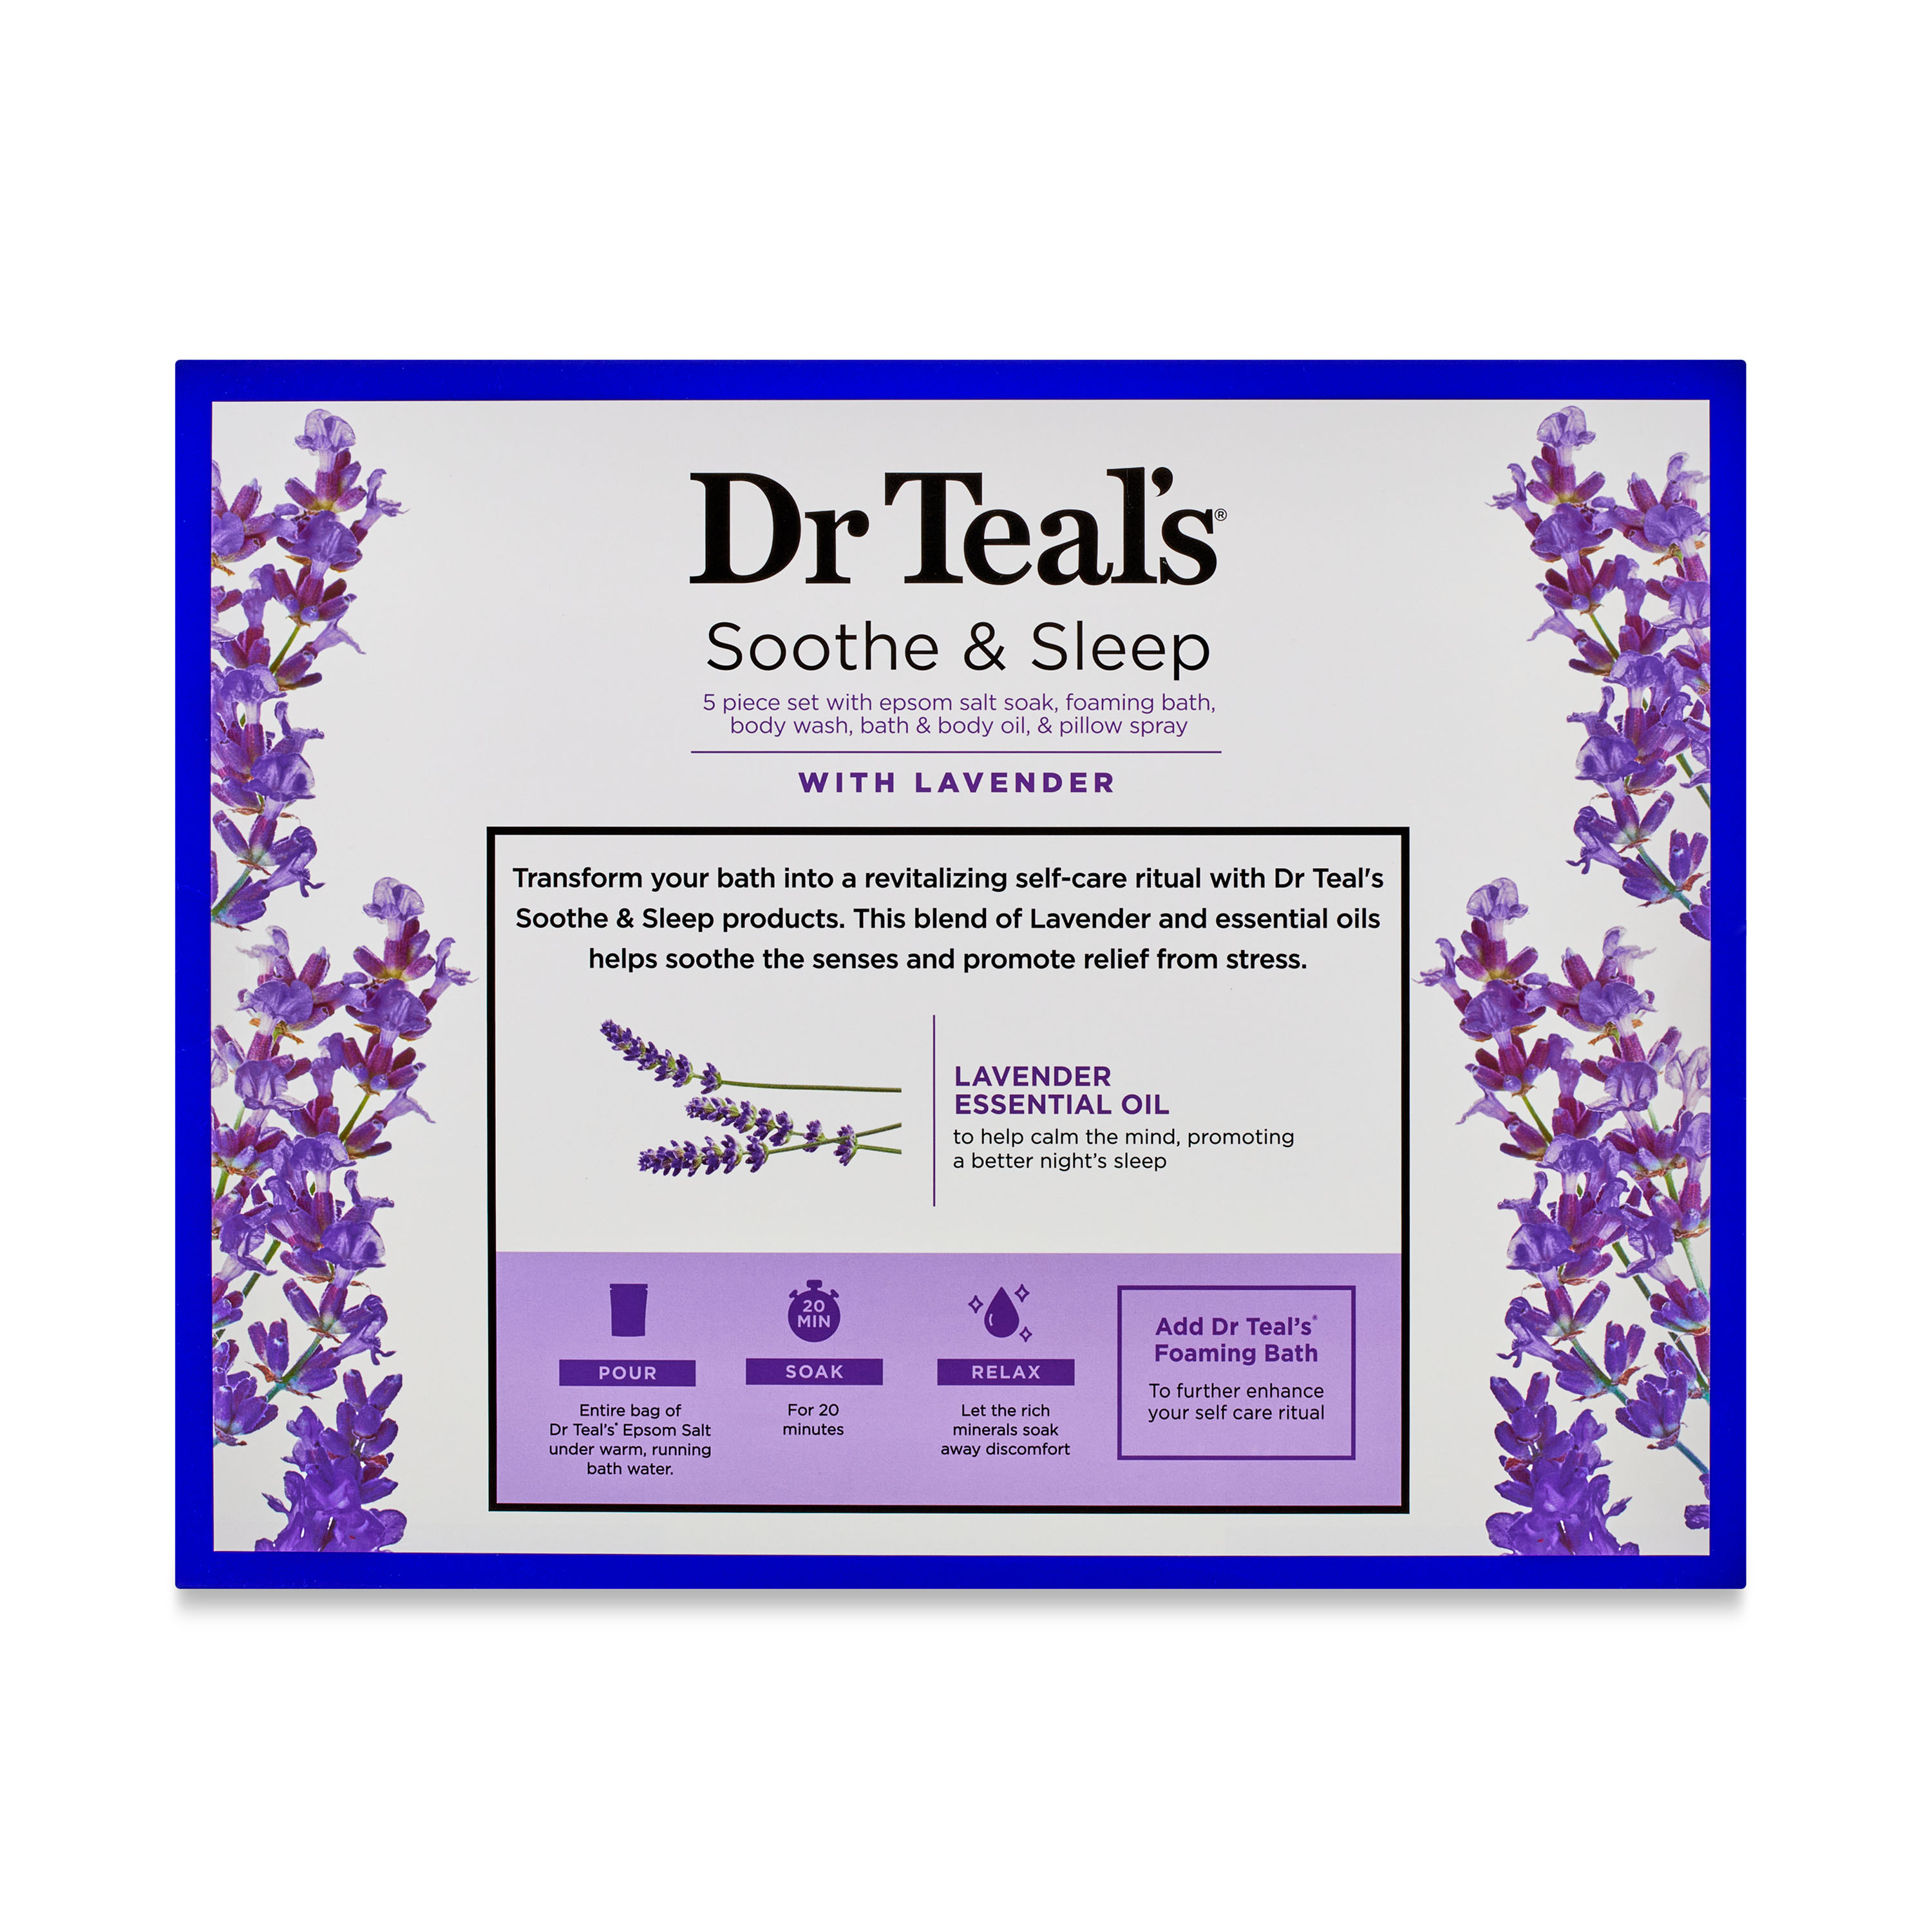 Dr Teal’s Soothe & Sleep Gift Set, Lavender, 5 Piece - image 5 of 5